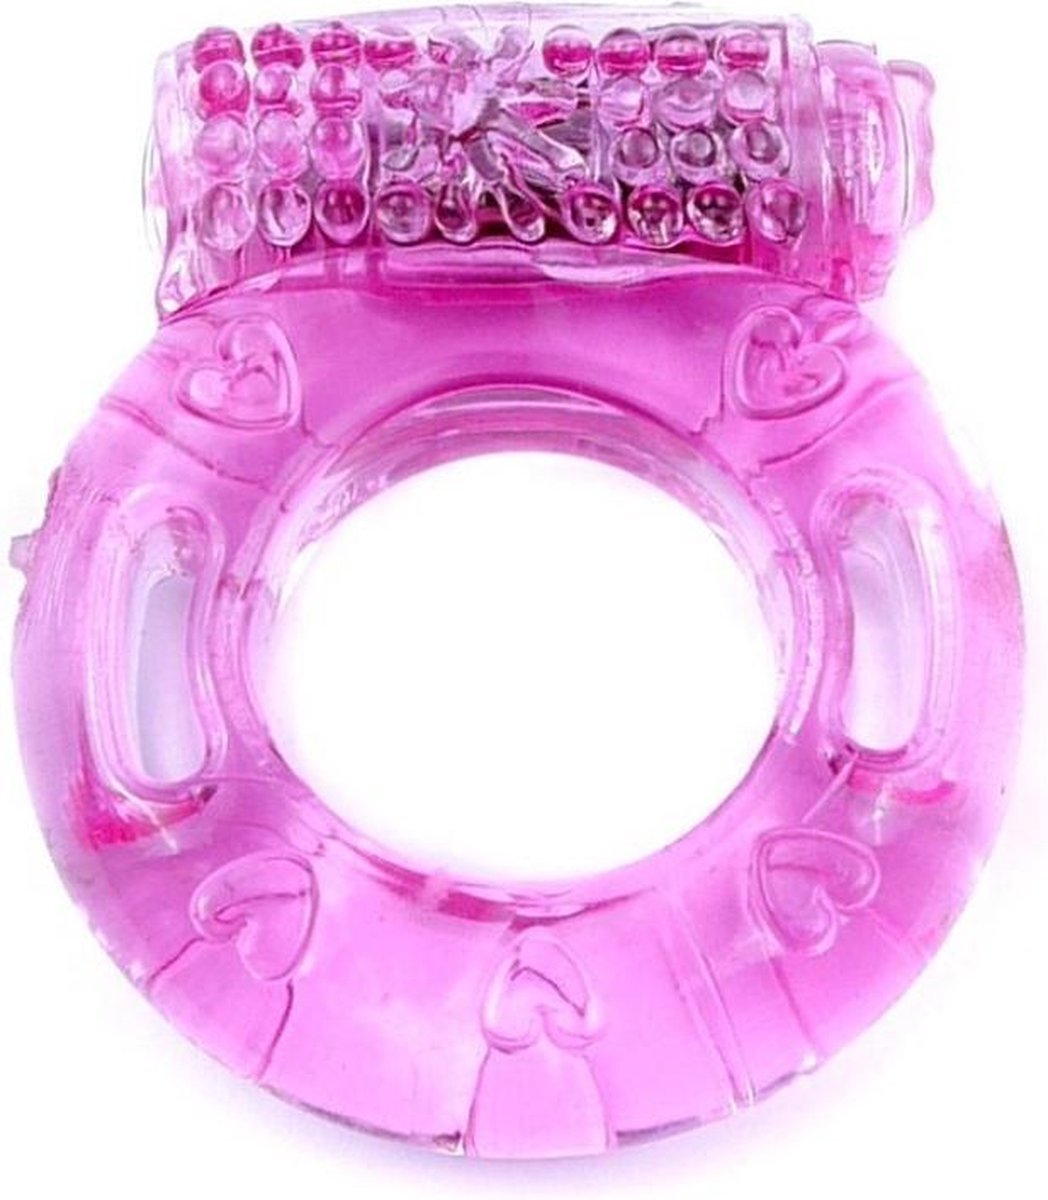 Penis Ring - CockRing - Met Vibratie - Pink